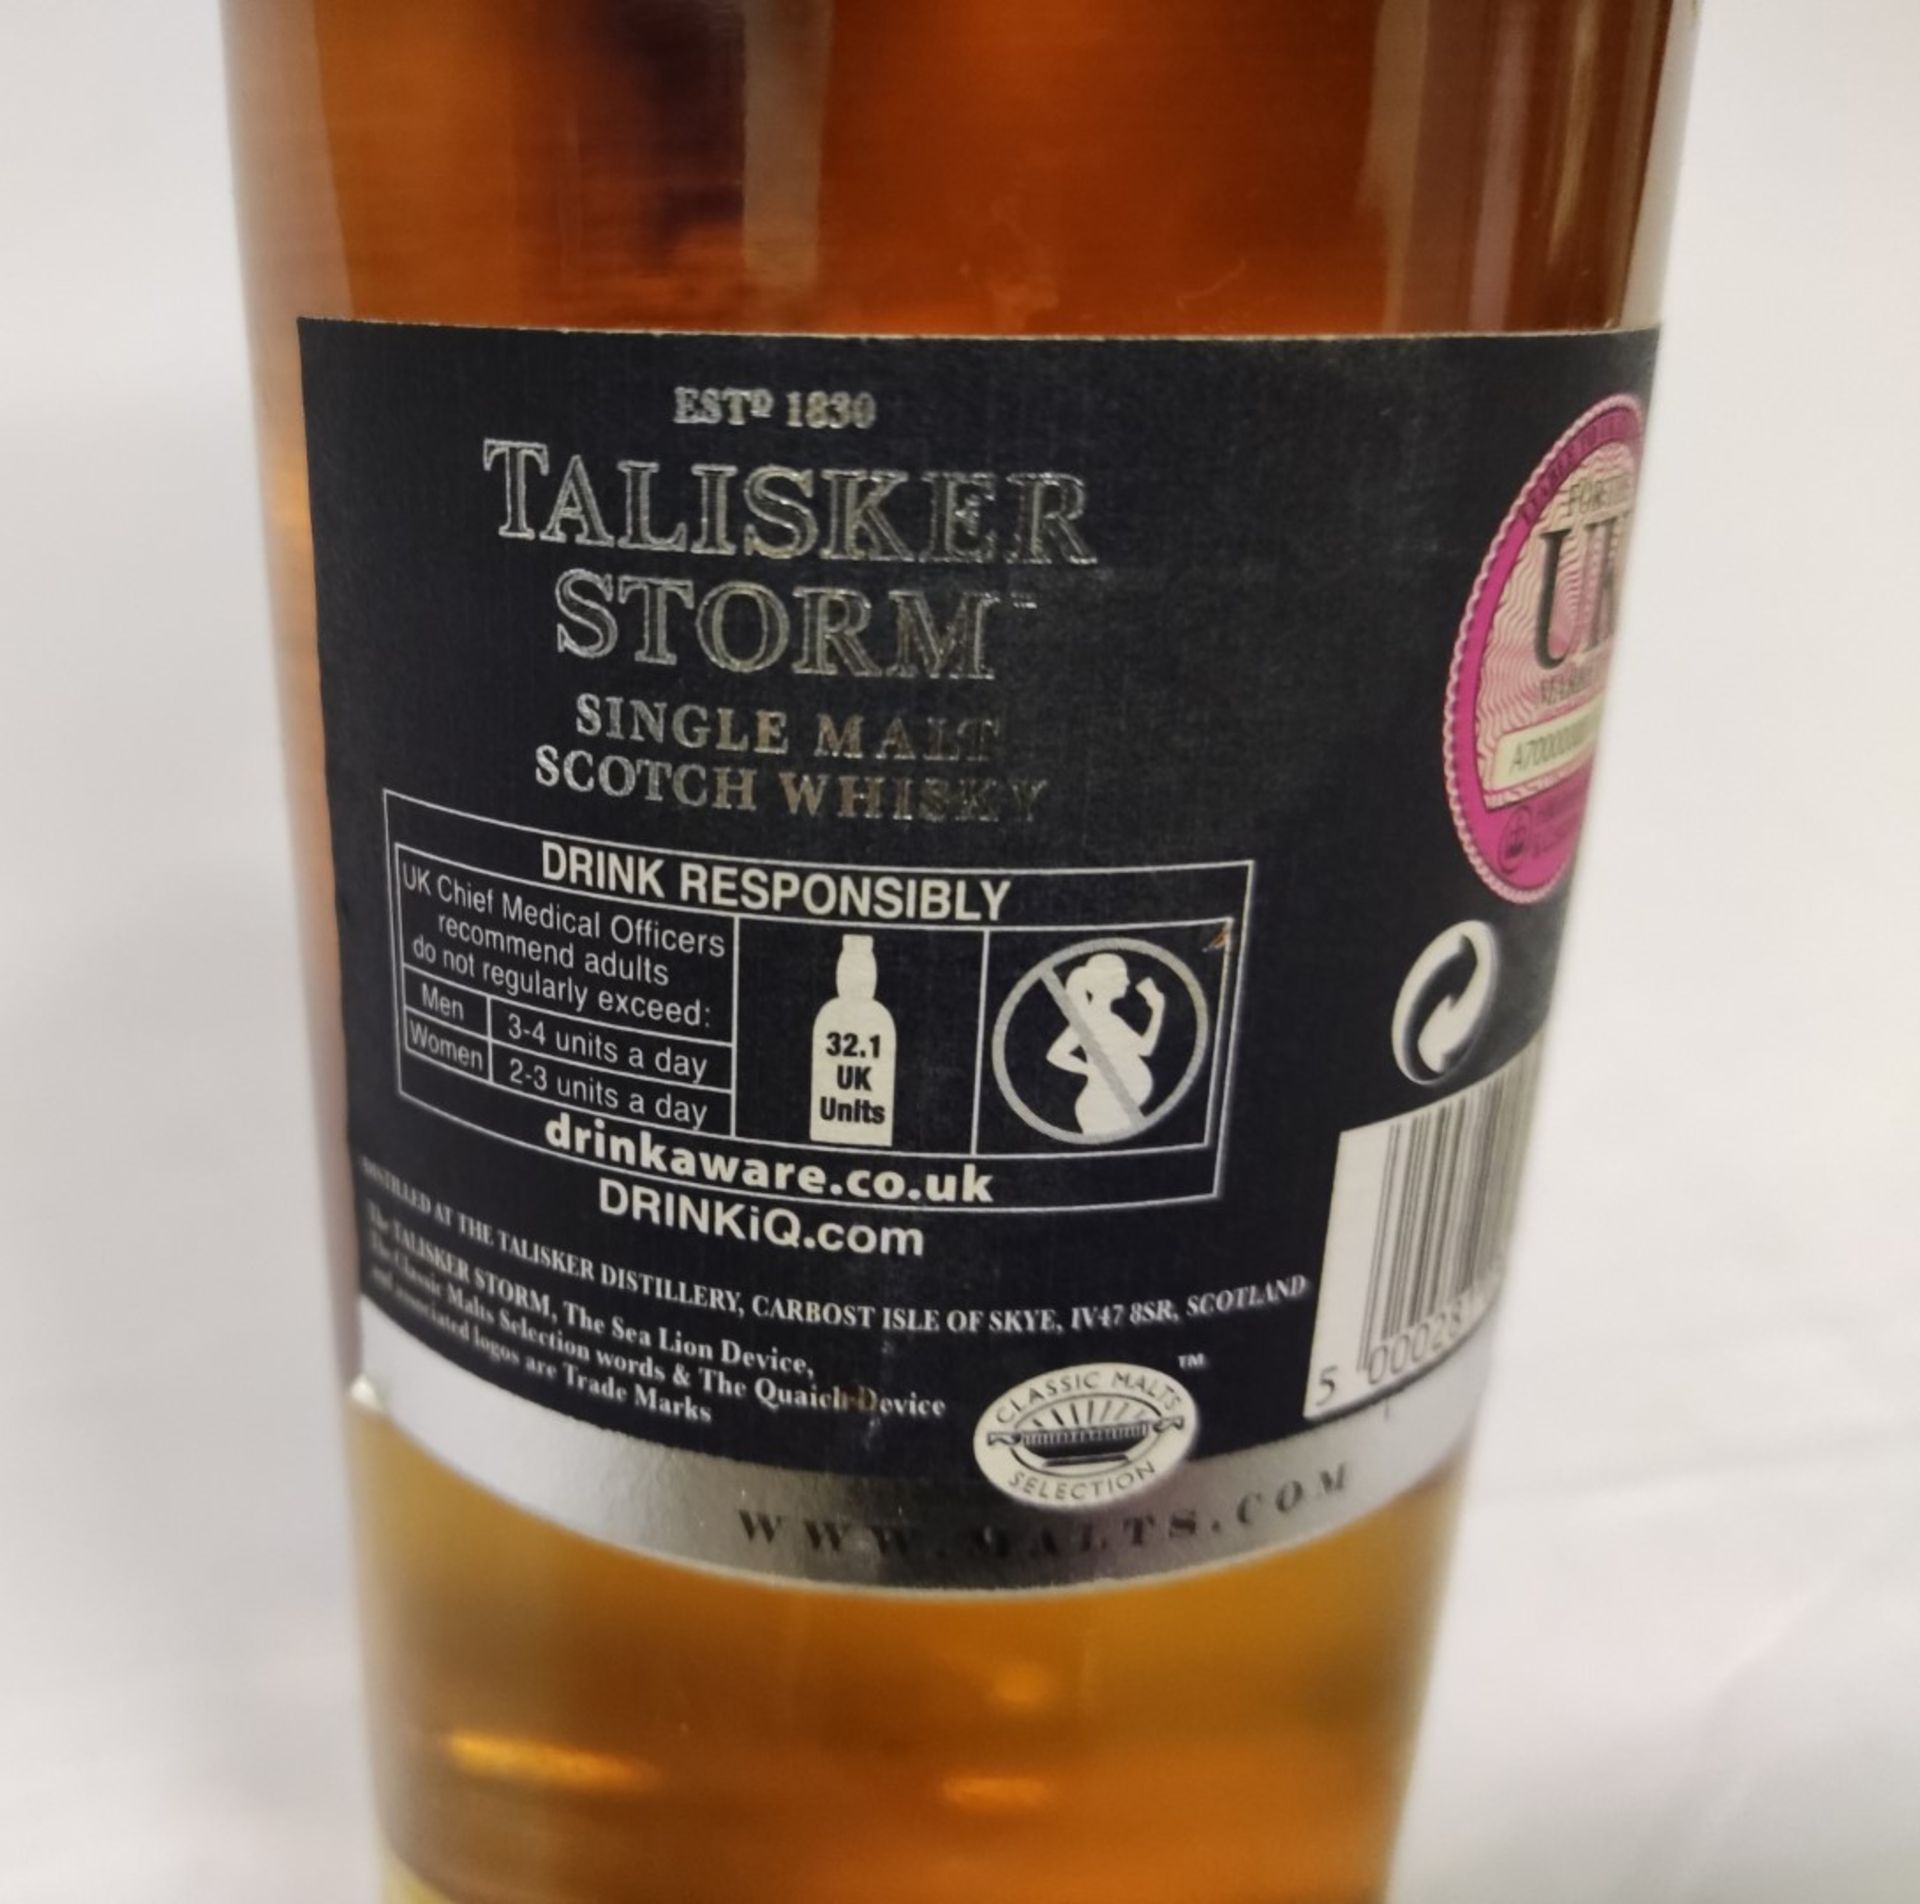 1 x Bottle of Talisker Storm Single Malt Scotch Whisky - 70cl - Retail Price £46 - Ref: WAS447/ - Image 7 of 7